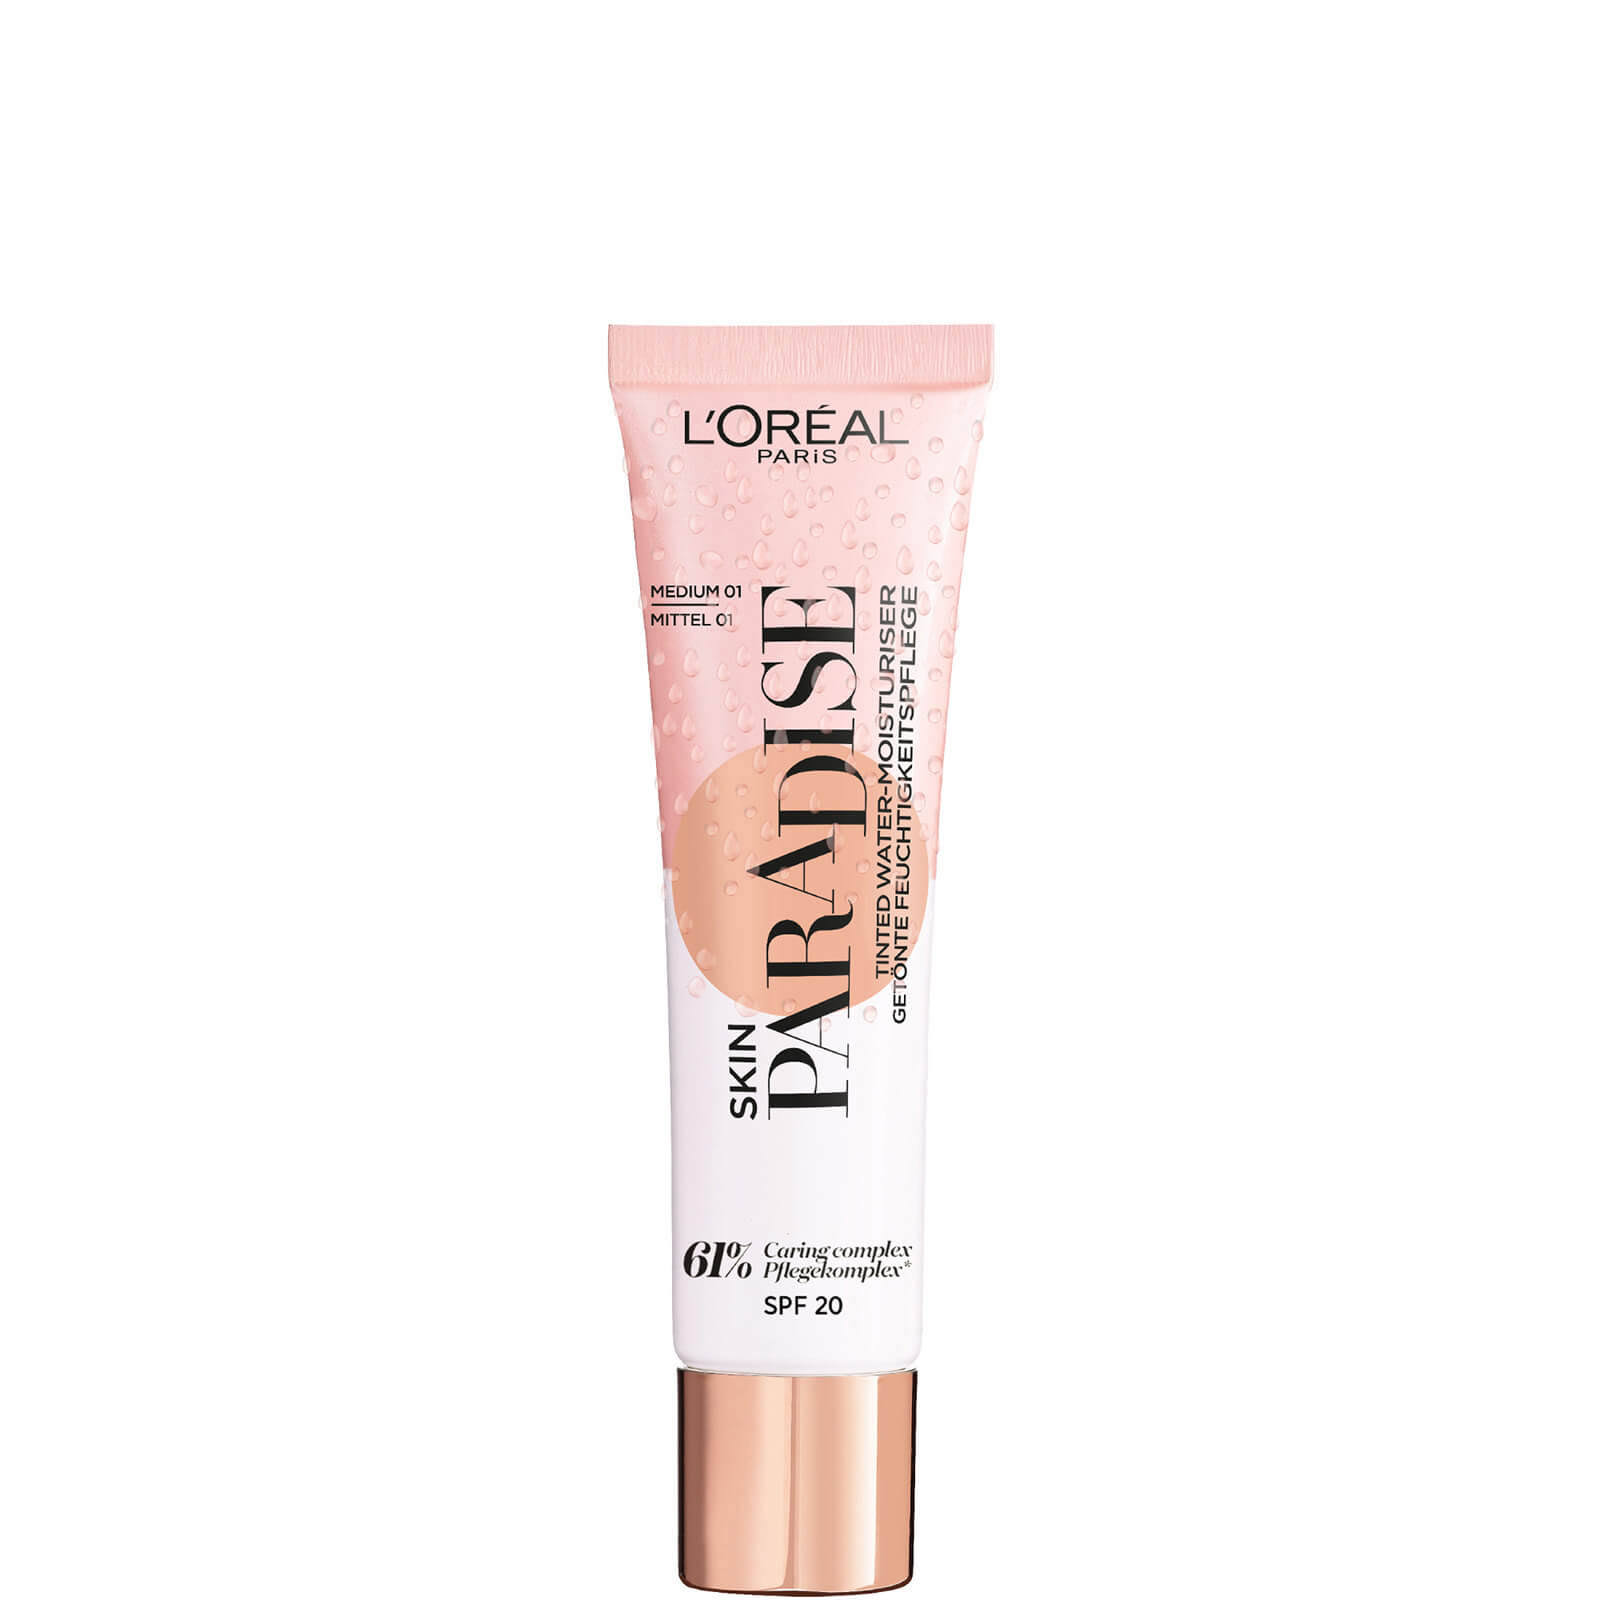 L'Oréal Paris Skin Paradise Tinted Water Cream SPF20 Medium 01 30ml